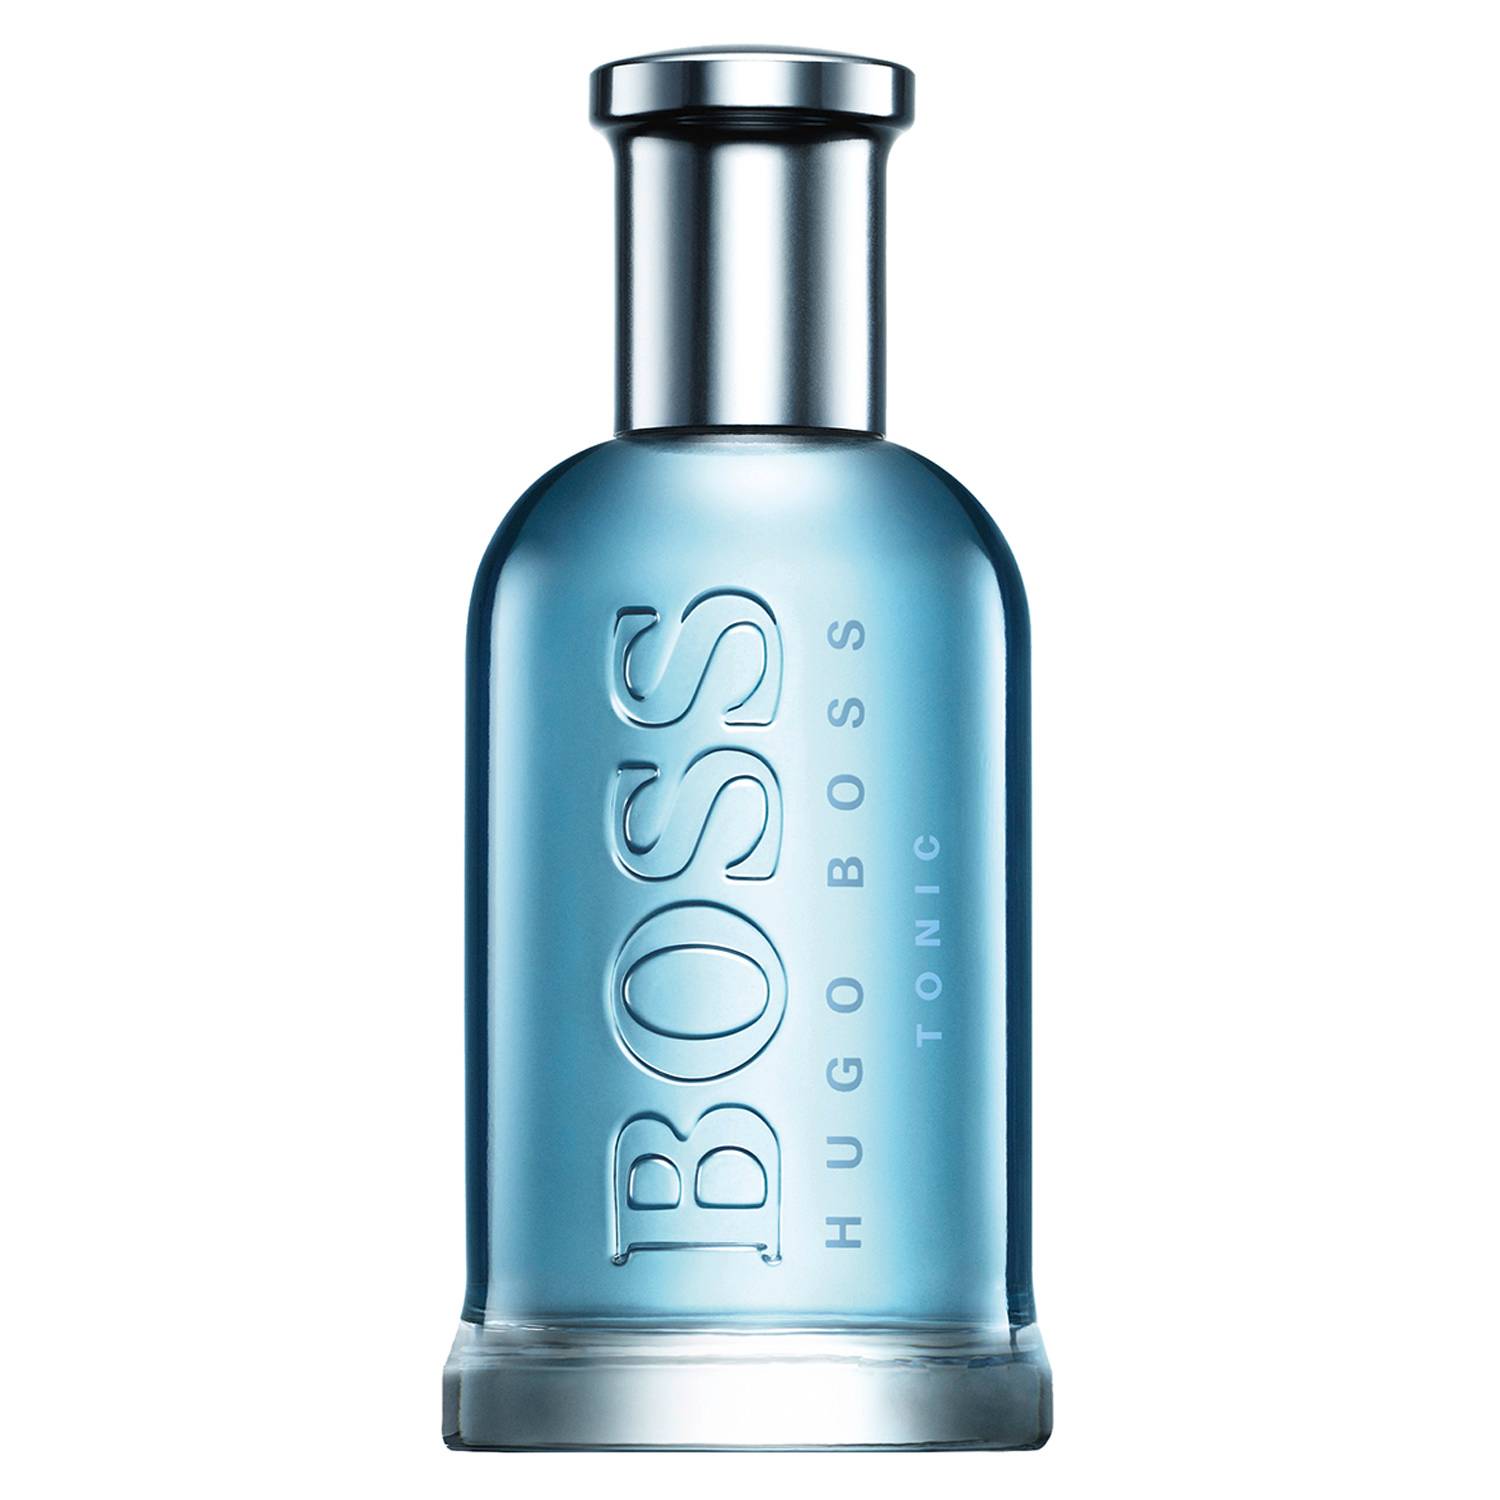 Boss Bottled Tonic Hugo Boss - Perfume Masculino Eau de Toilette 100ml